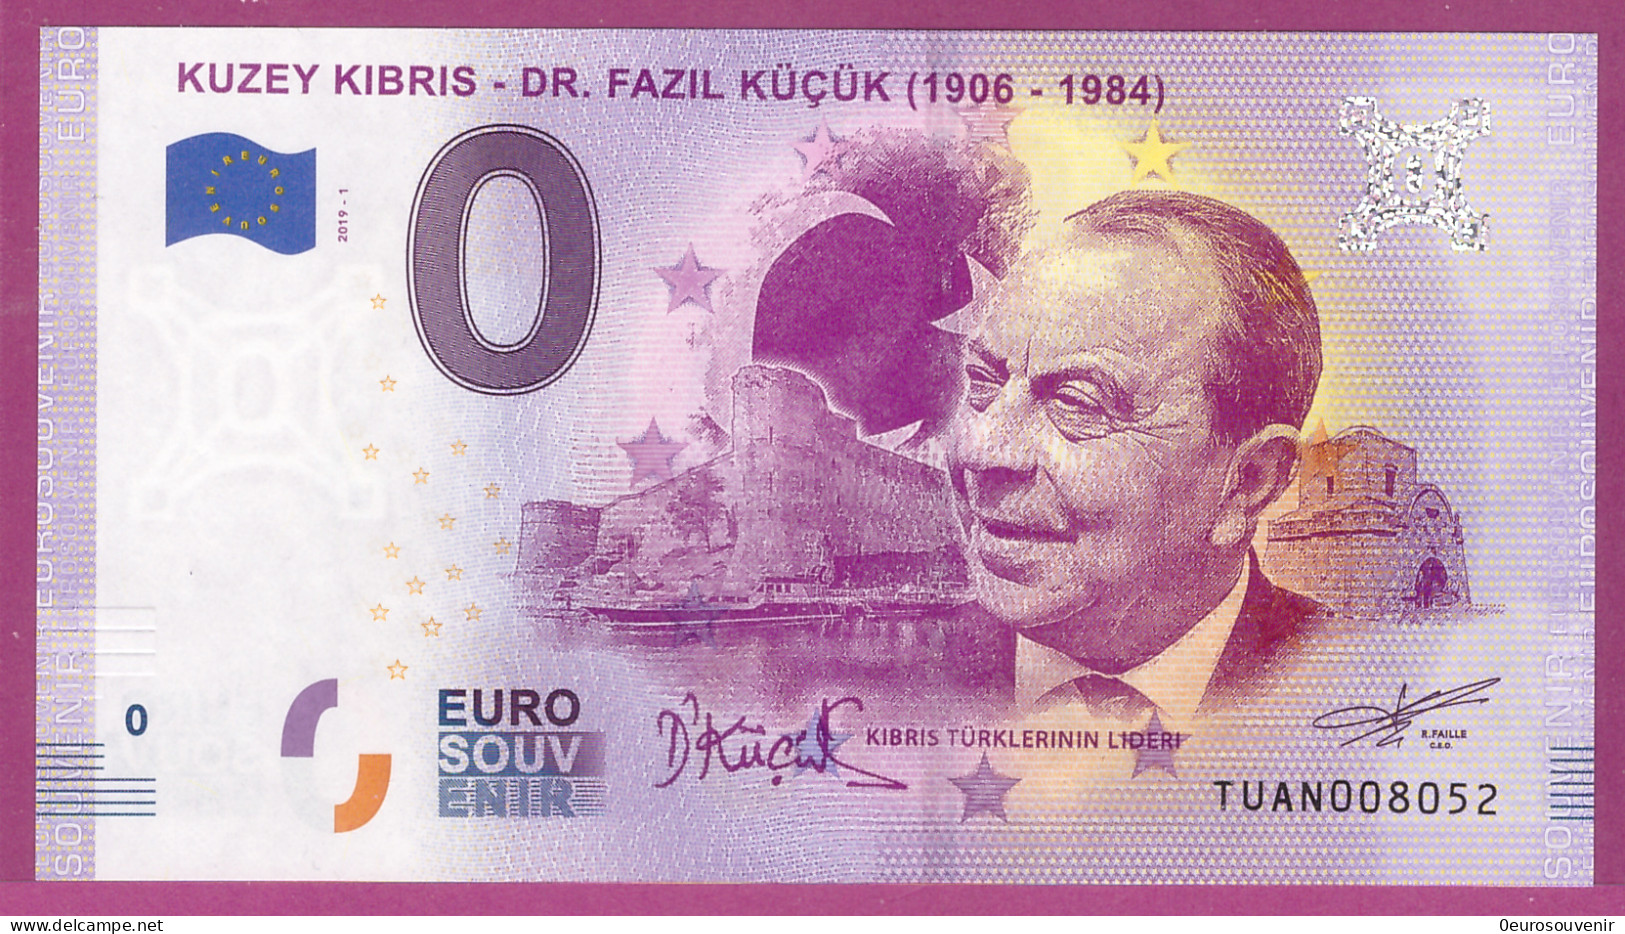 0-Euro TUAN 2019-1 KUZEY KIBRIS - DR. FAZIL KÜÇÜK (1906-1984) NORD-ZYPERN - Private Proofs / Unofficial